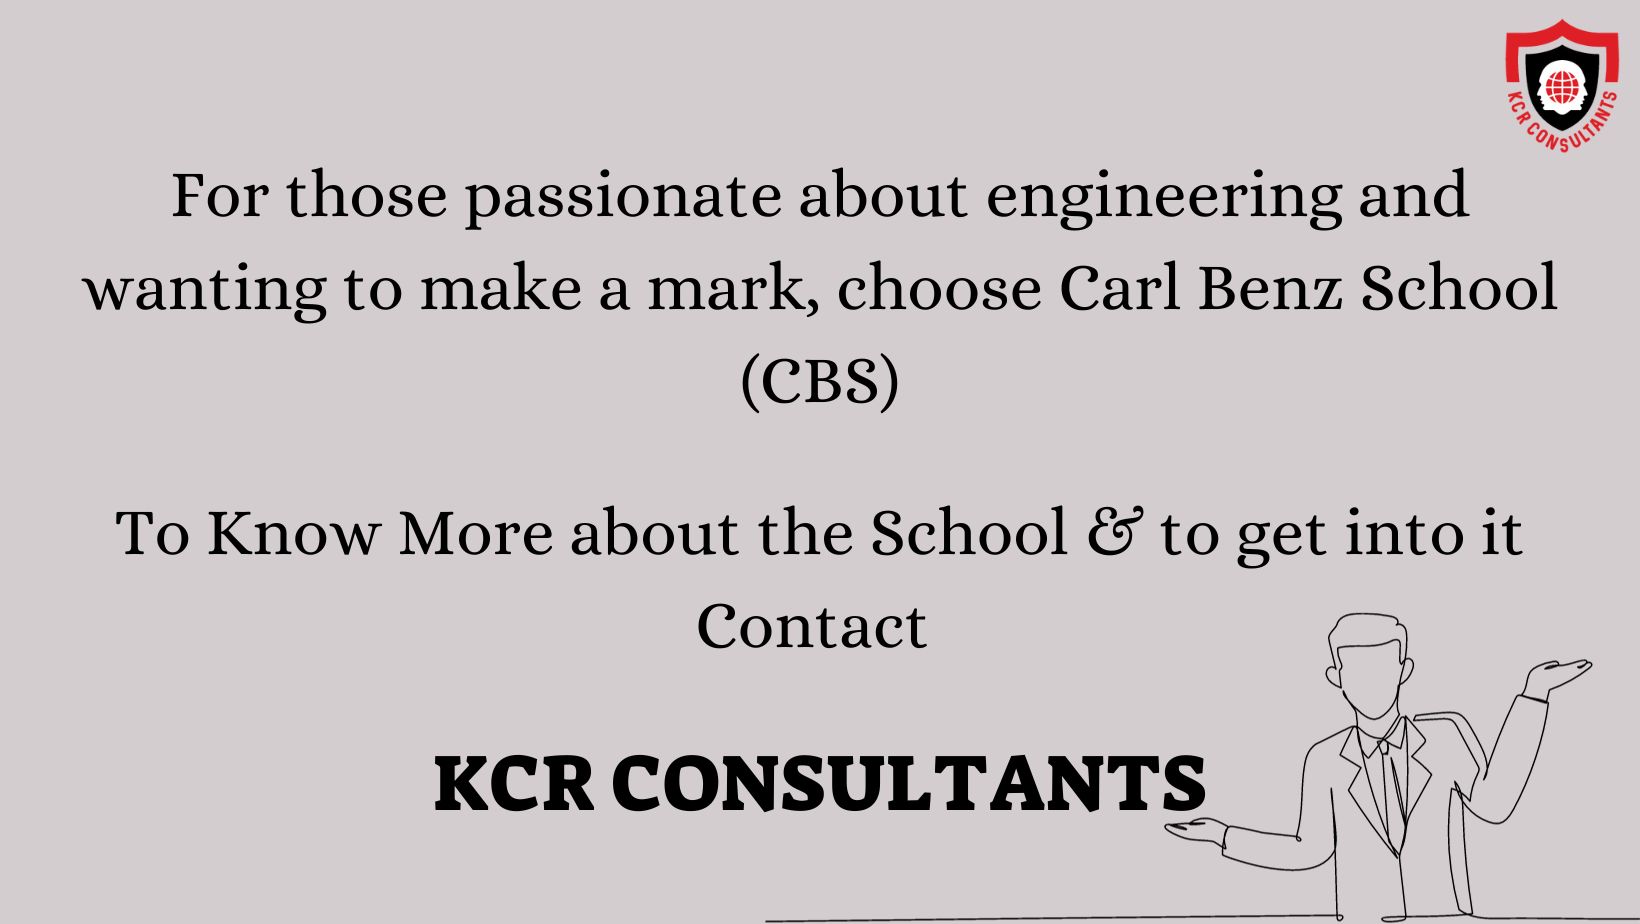 CARL BENZ SCHOOL (CBS) - KCR CONSULTANTS - Contact us